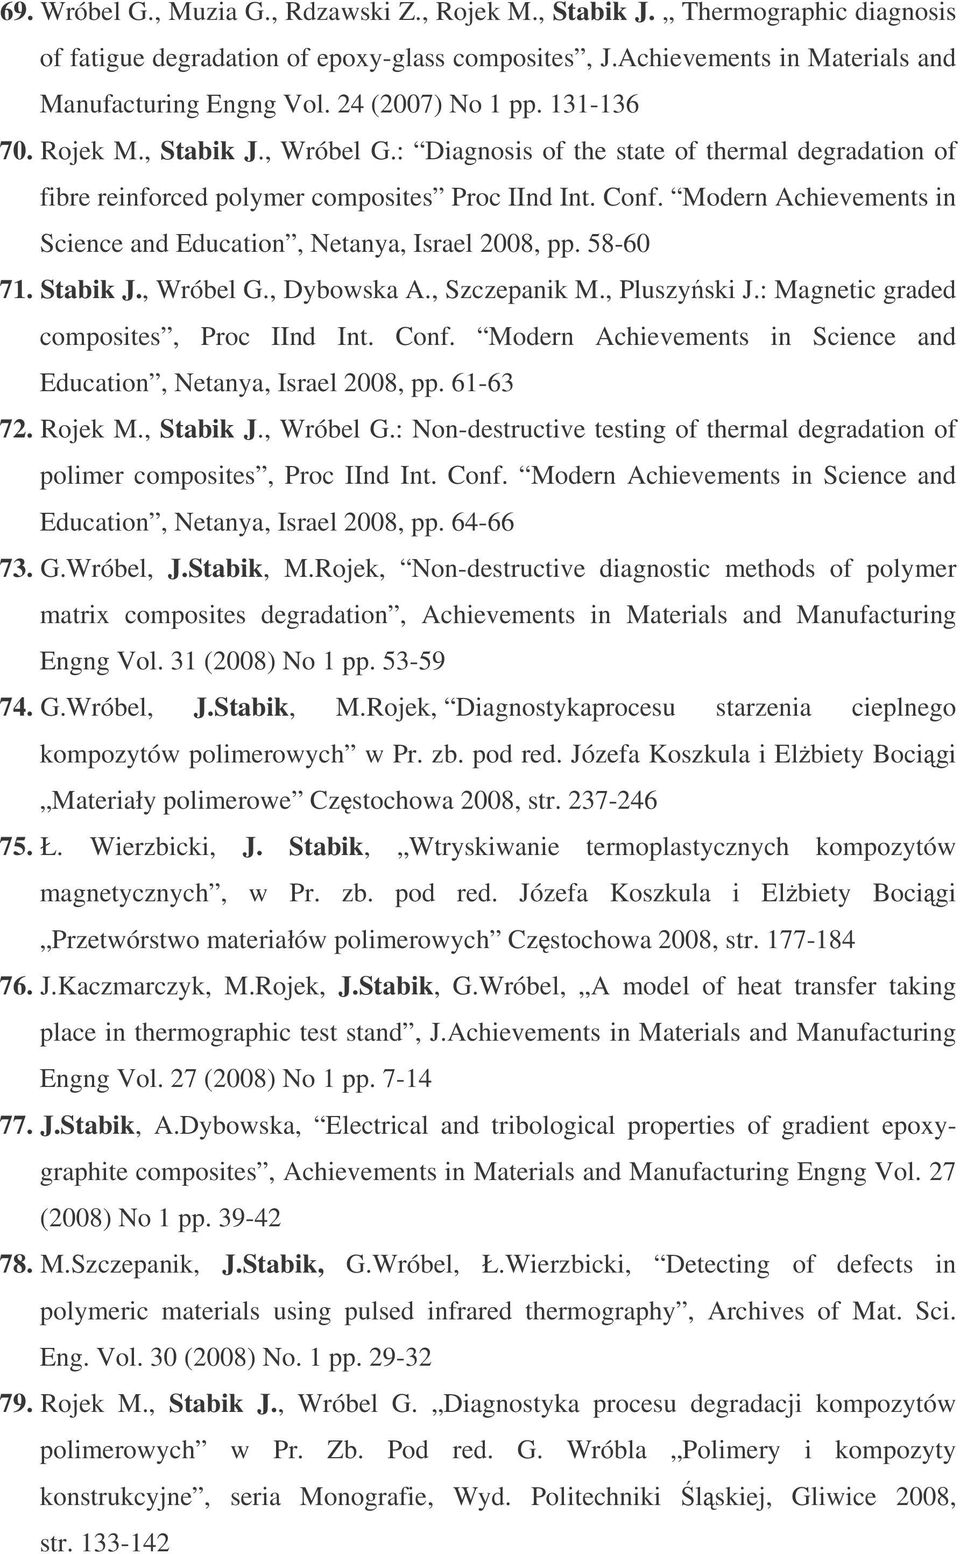 Modern Achievements in Science and Education, Netanya, Israel 2008, pp. 58-60 71. Stabik J., Wróbel G., Dybowska A., Szczepanik M., Pluszyski J.: Magnetic graded composites, Proc IInd Int. Conf.